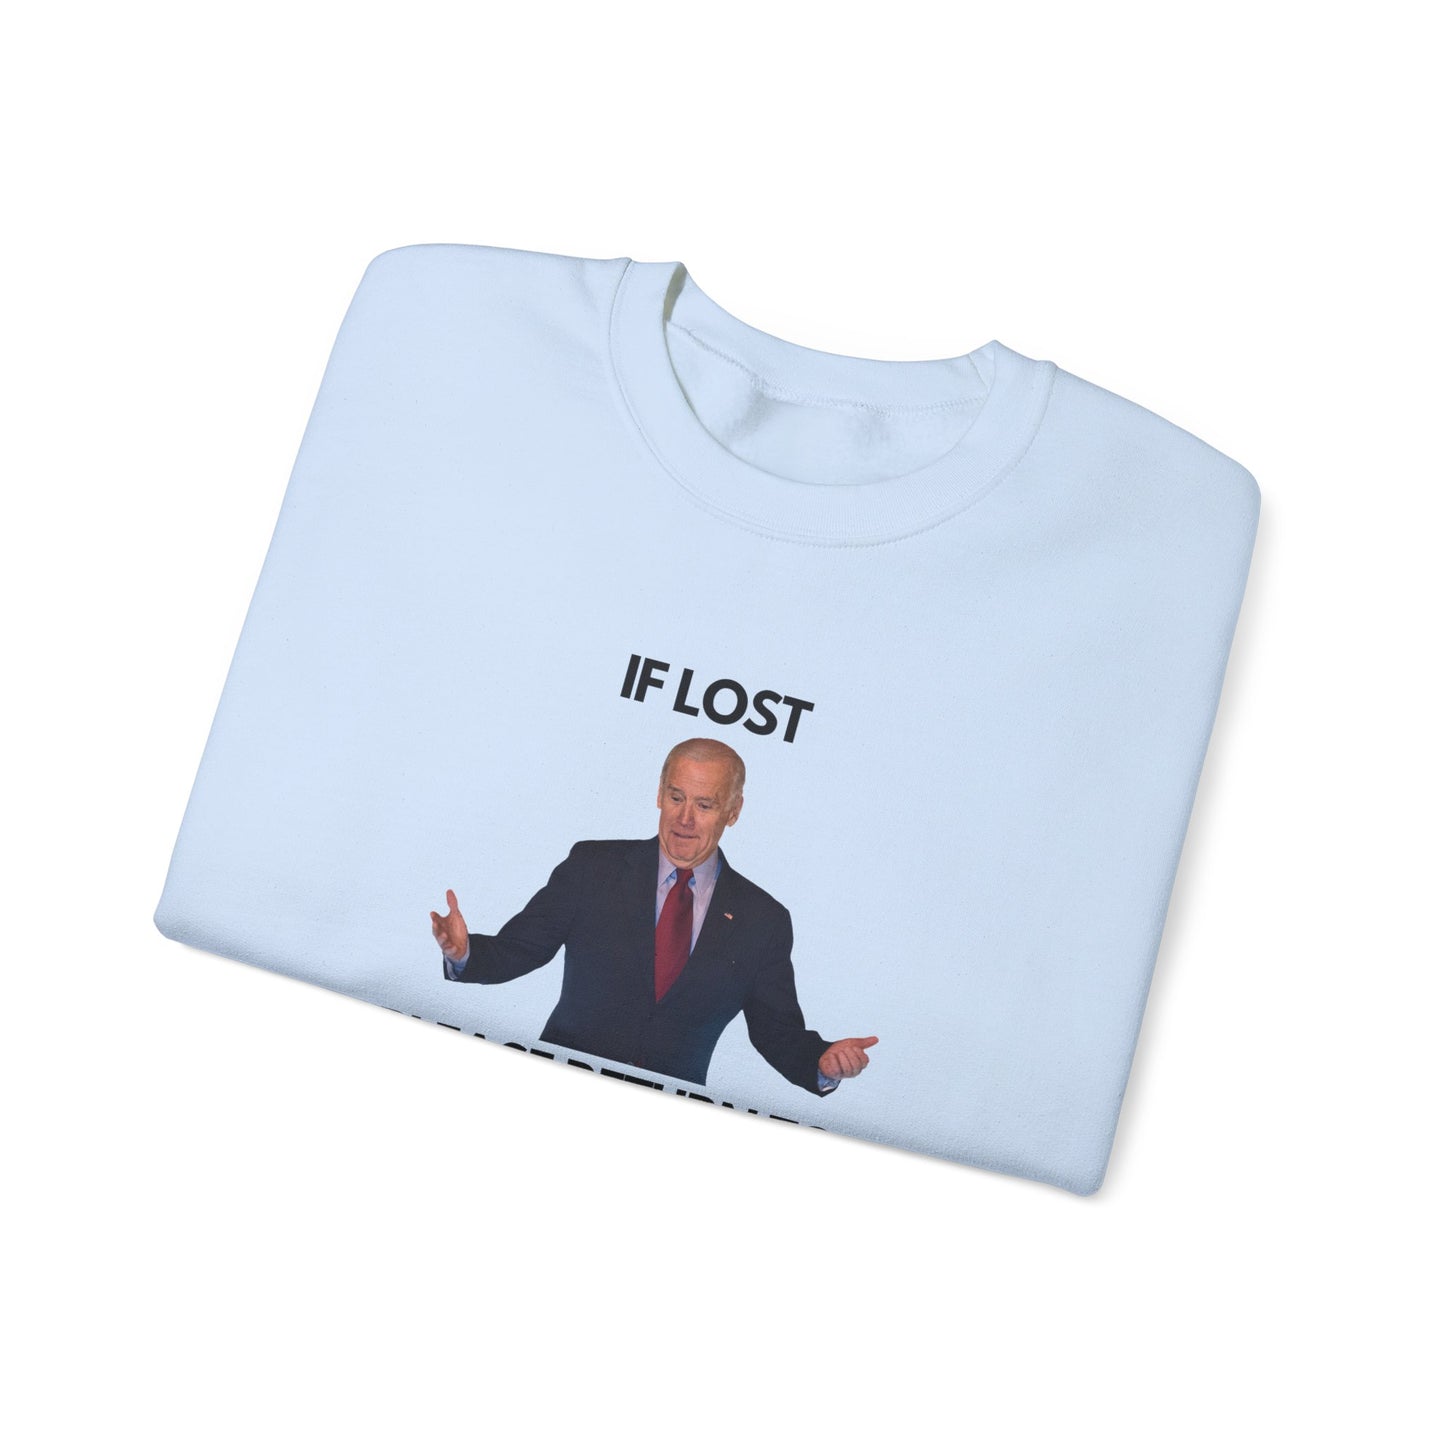 If Lost... Return To White House Crewneck Sweatshirt